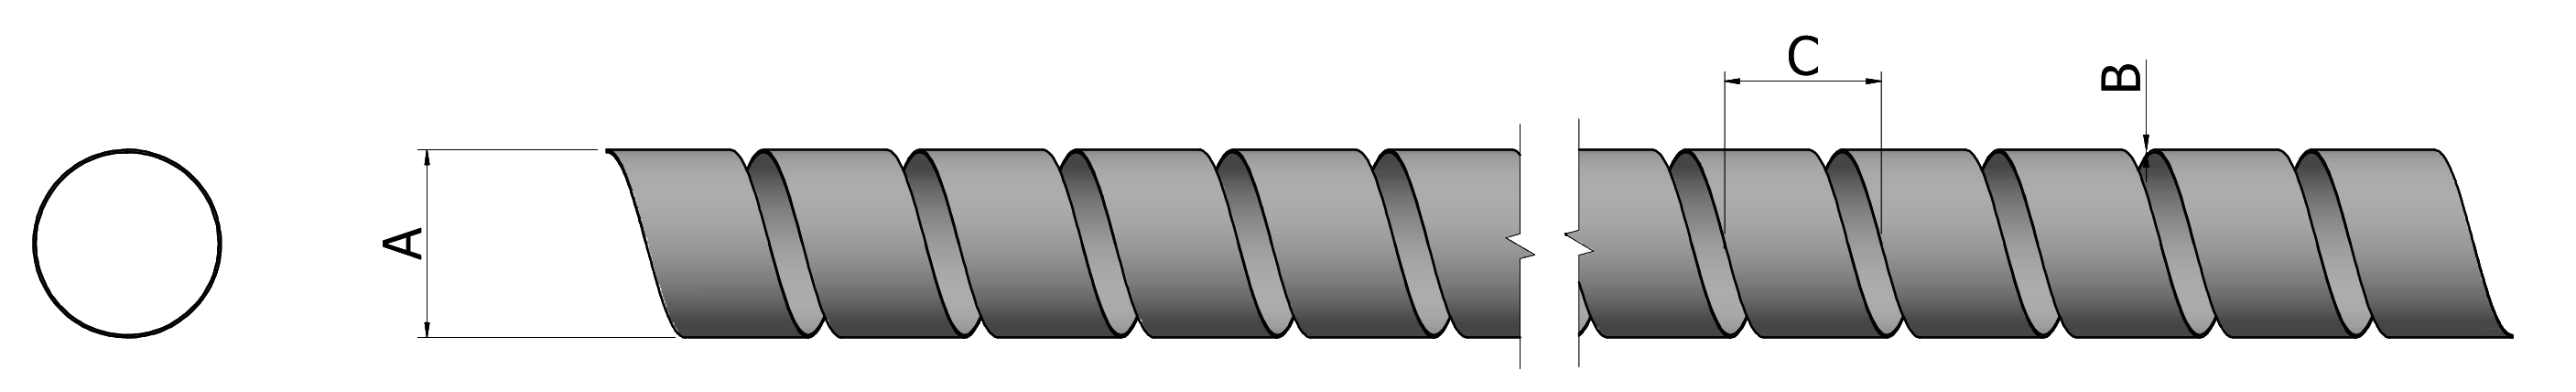 Structure of EMI shielding spiral gasket